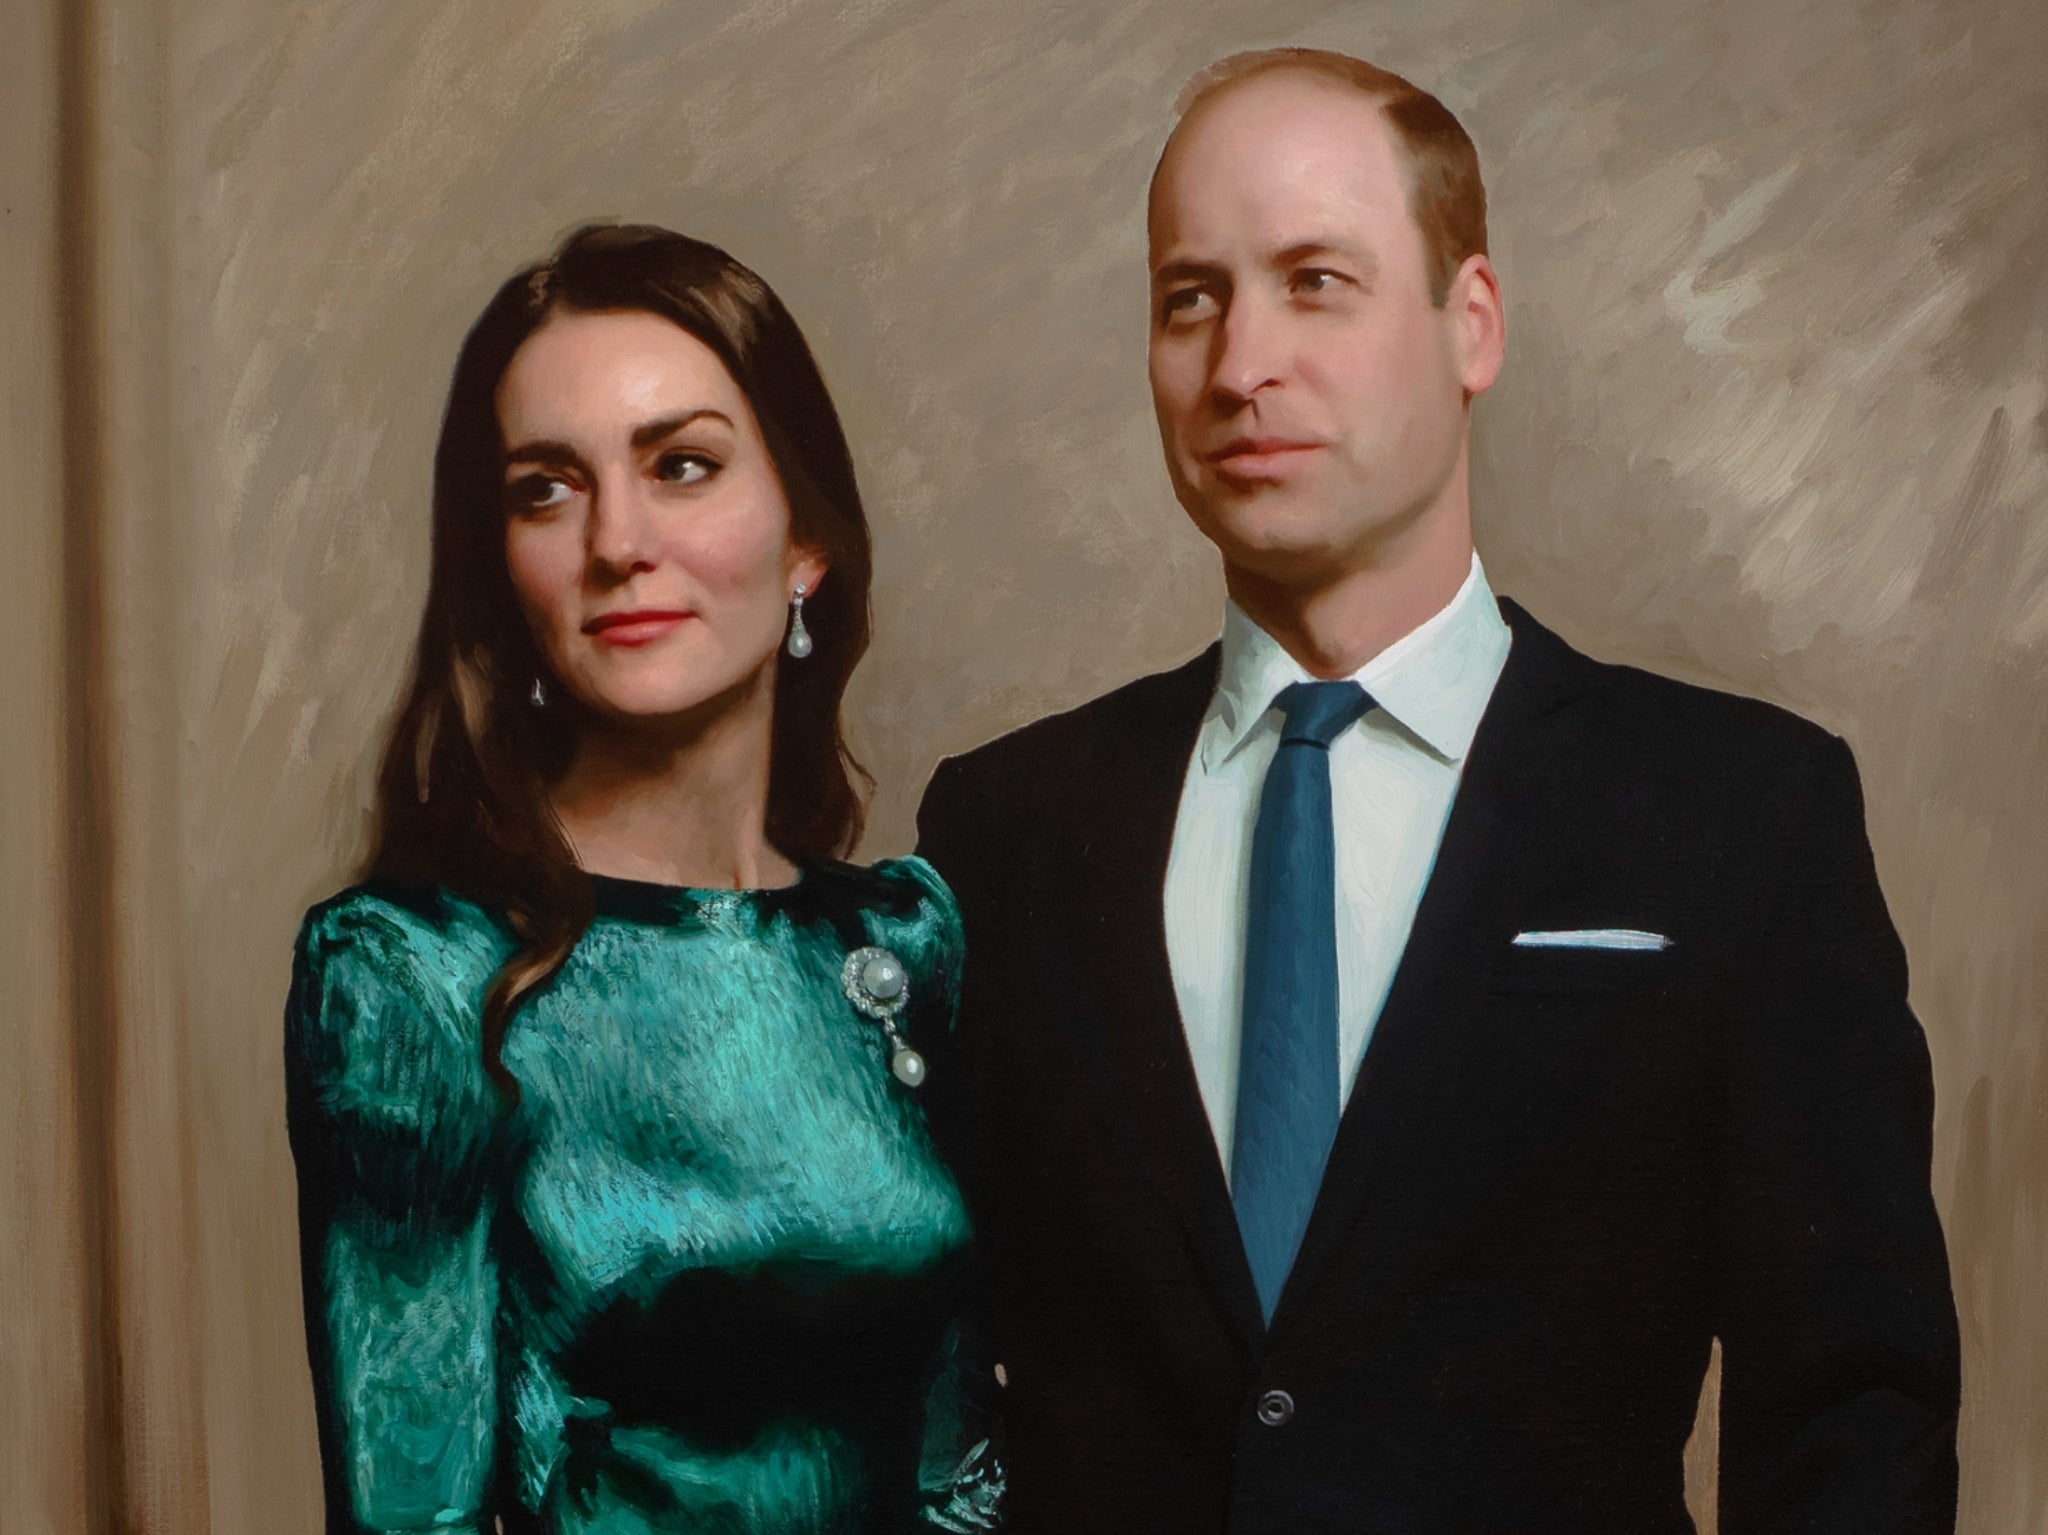 The new portrait of the Duke of Duchess of Cambridge